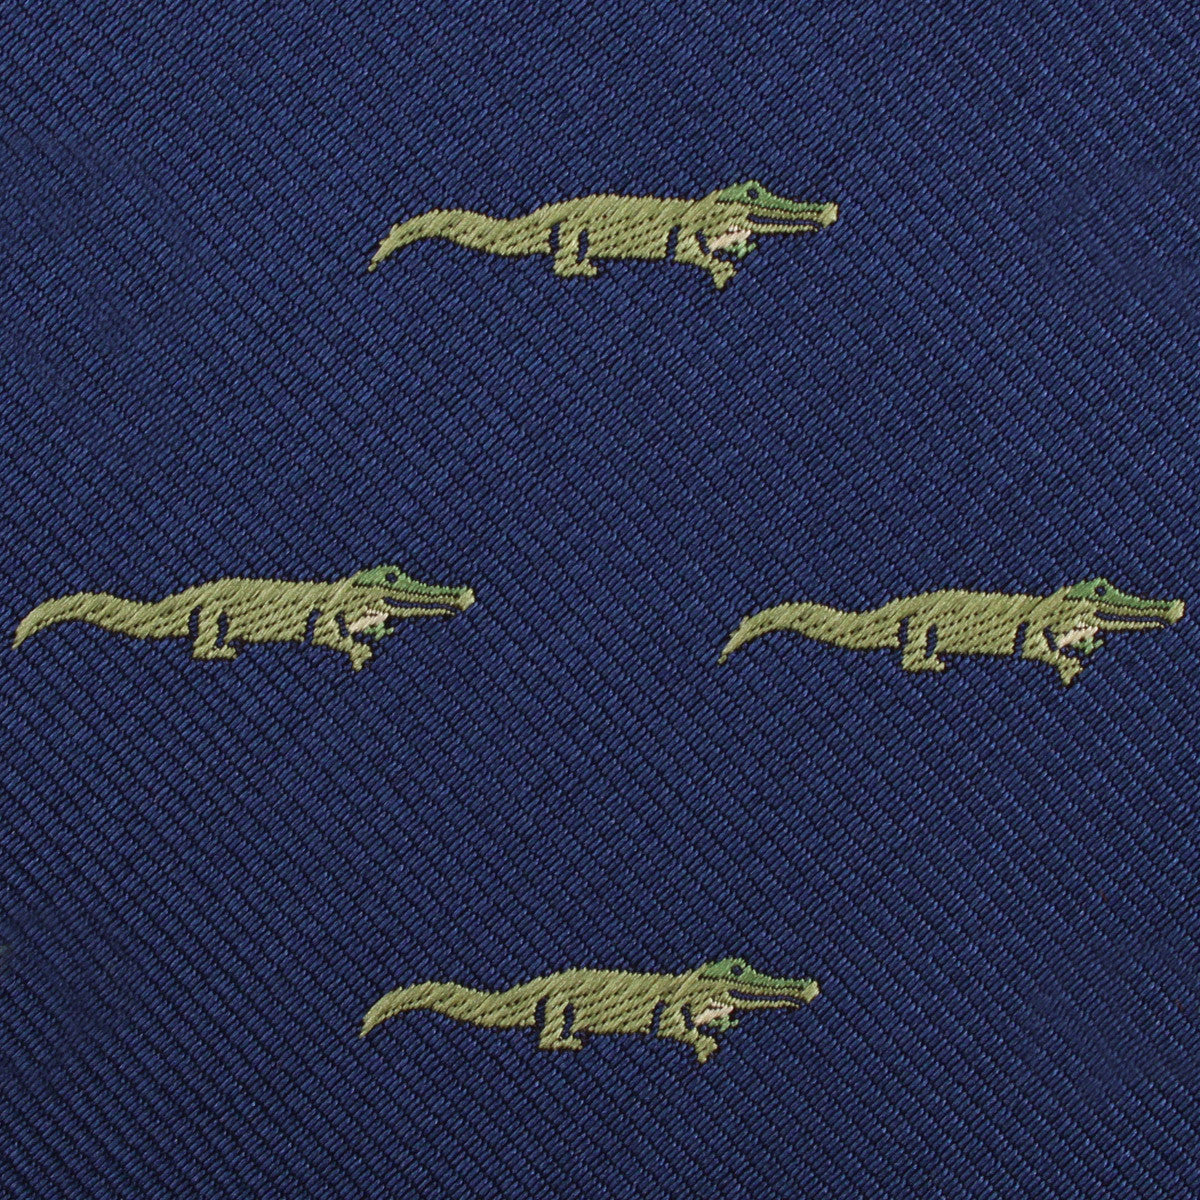 Saltwater Crocodile Fabric Necktie